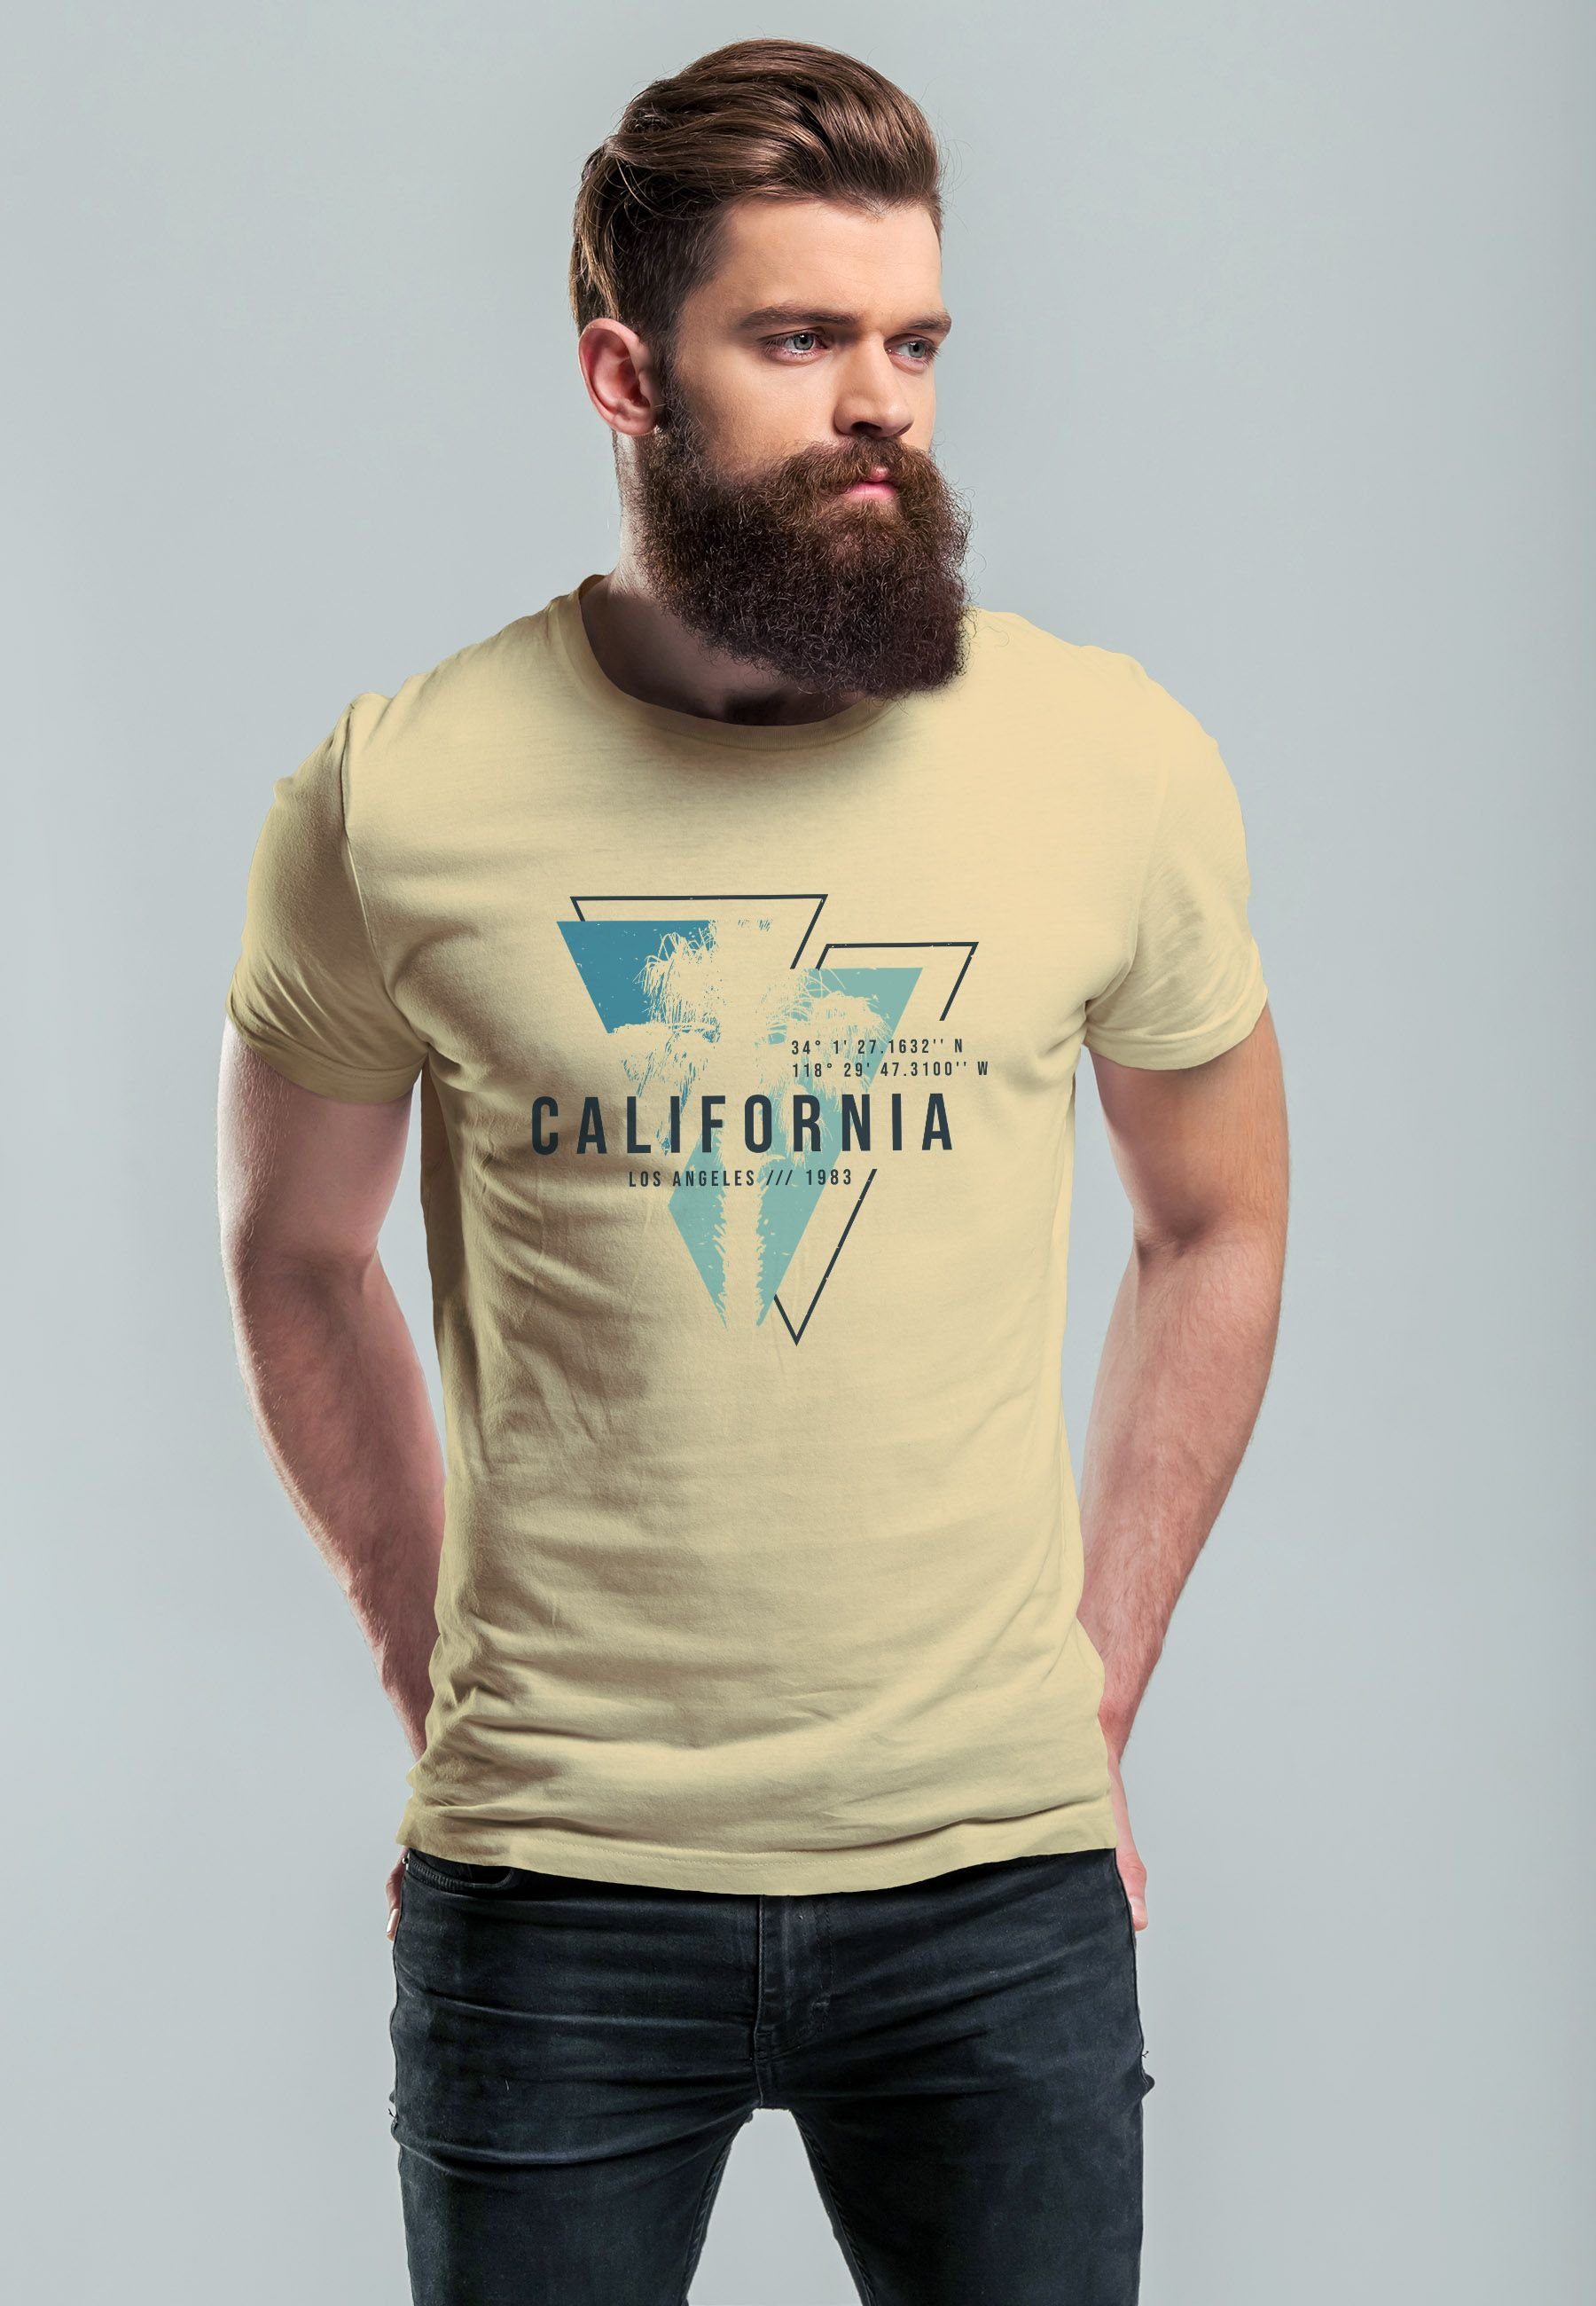 Neverless Print-Shirt Herren Motiv USA Print mit T-Shirt natur Fashion Surfing California Angeles Sommer Los